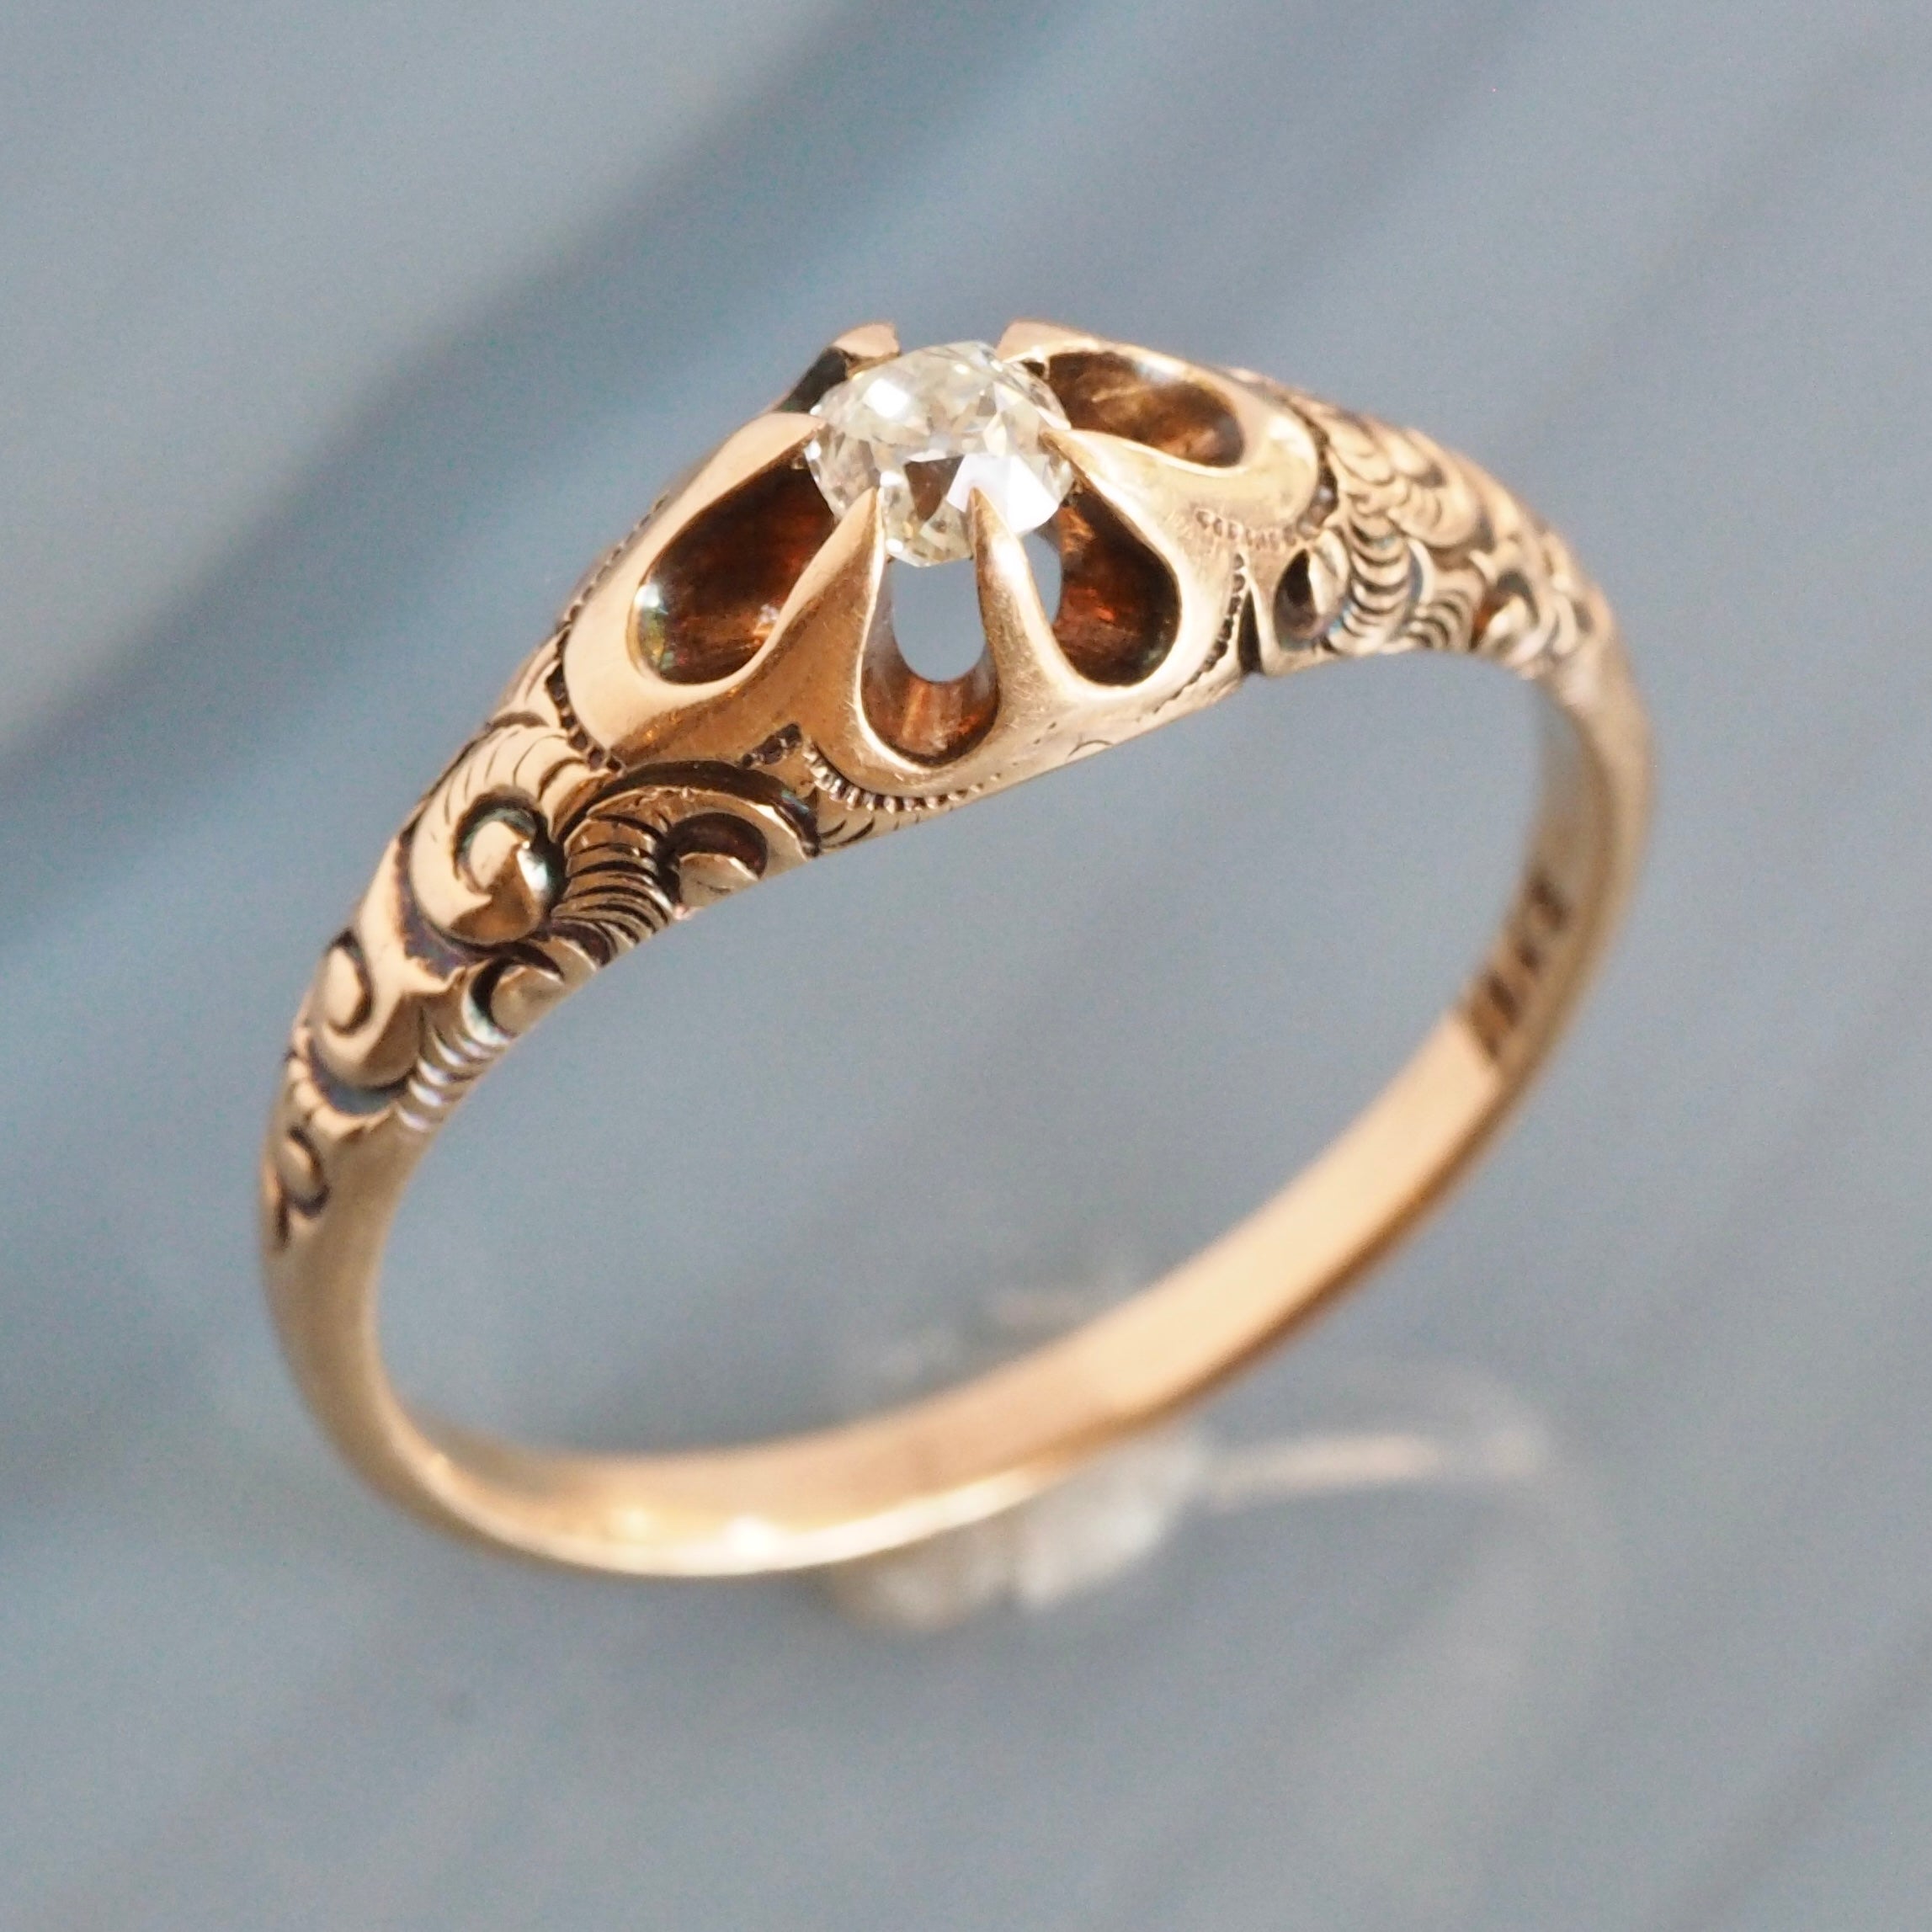 Antique Victorian 14k Gold Old Mine Cut Diamond Belcher Set Ring